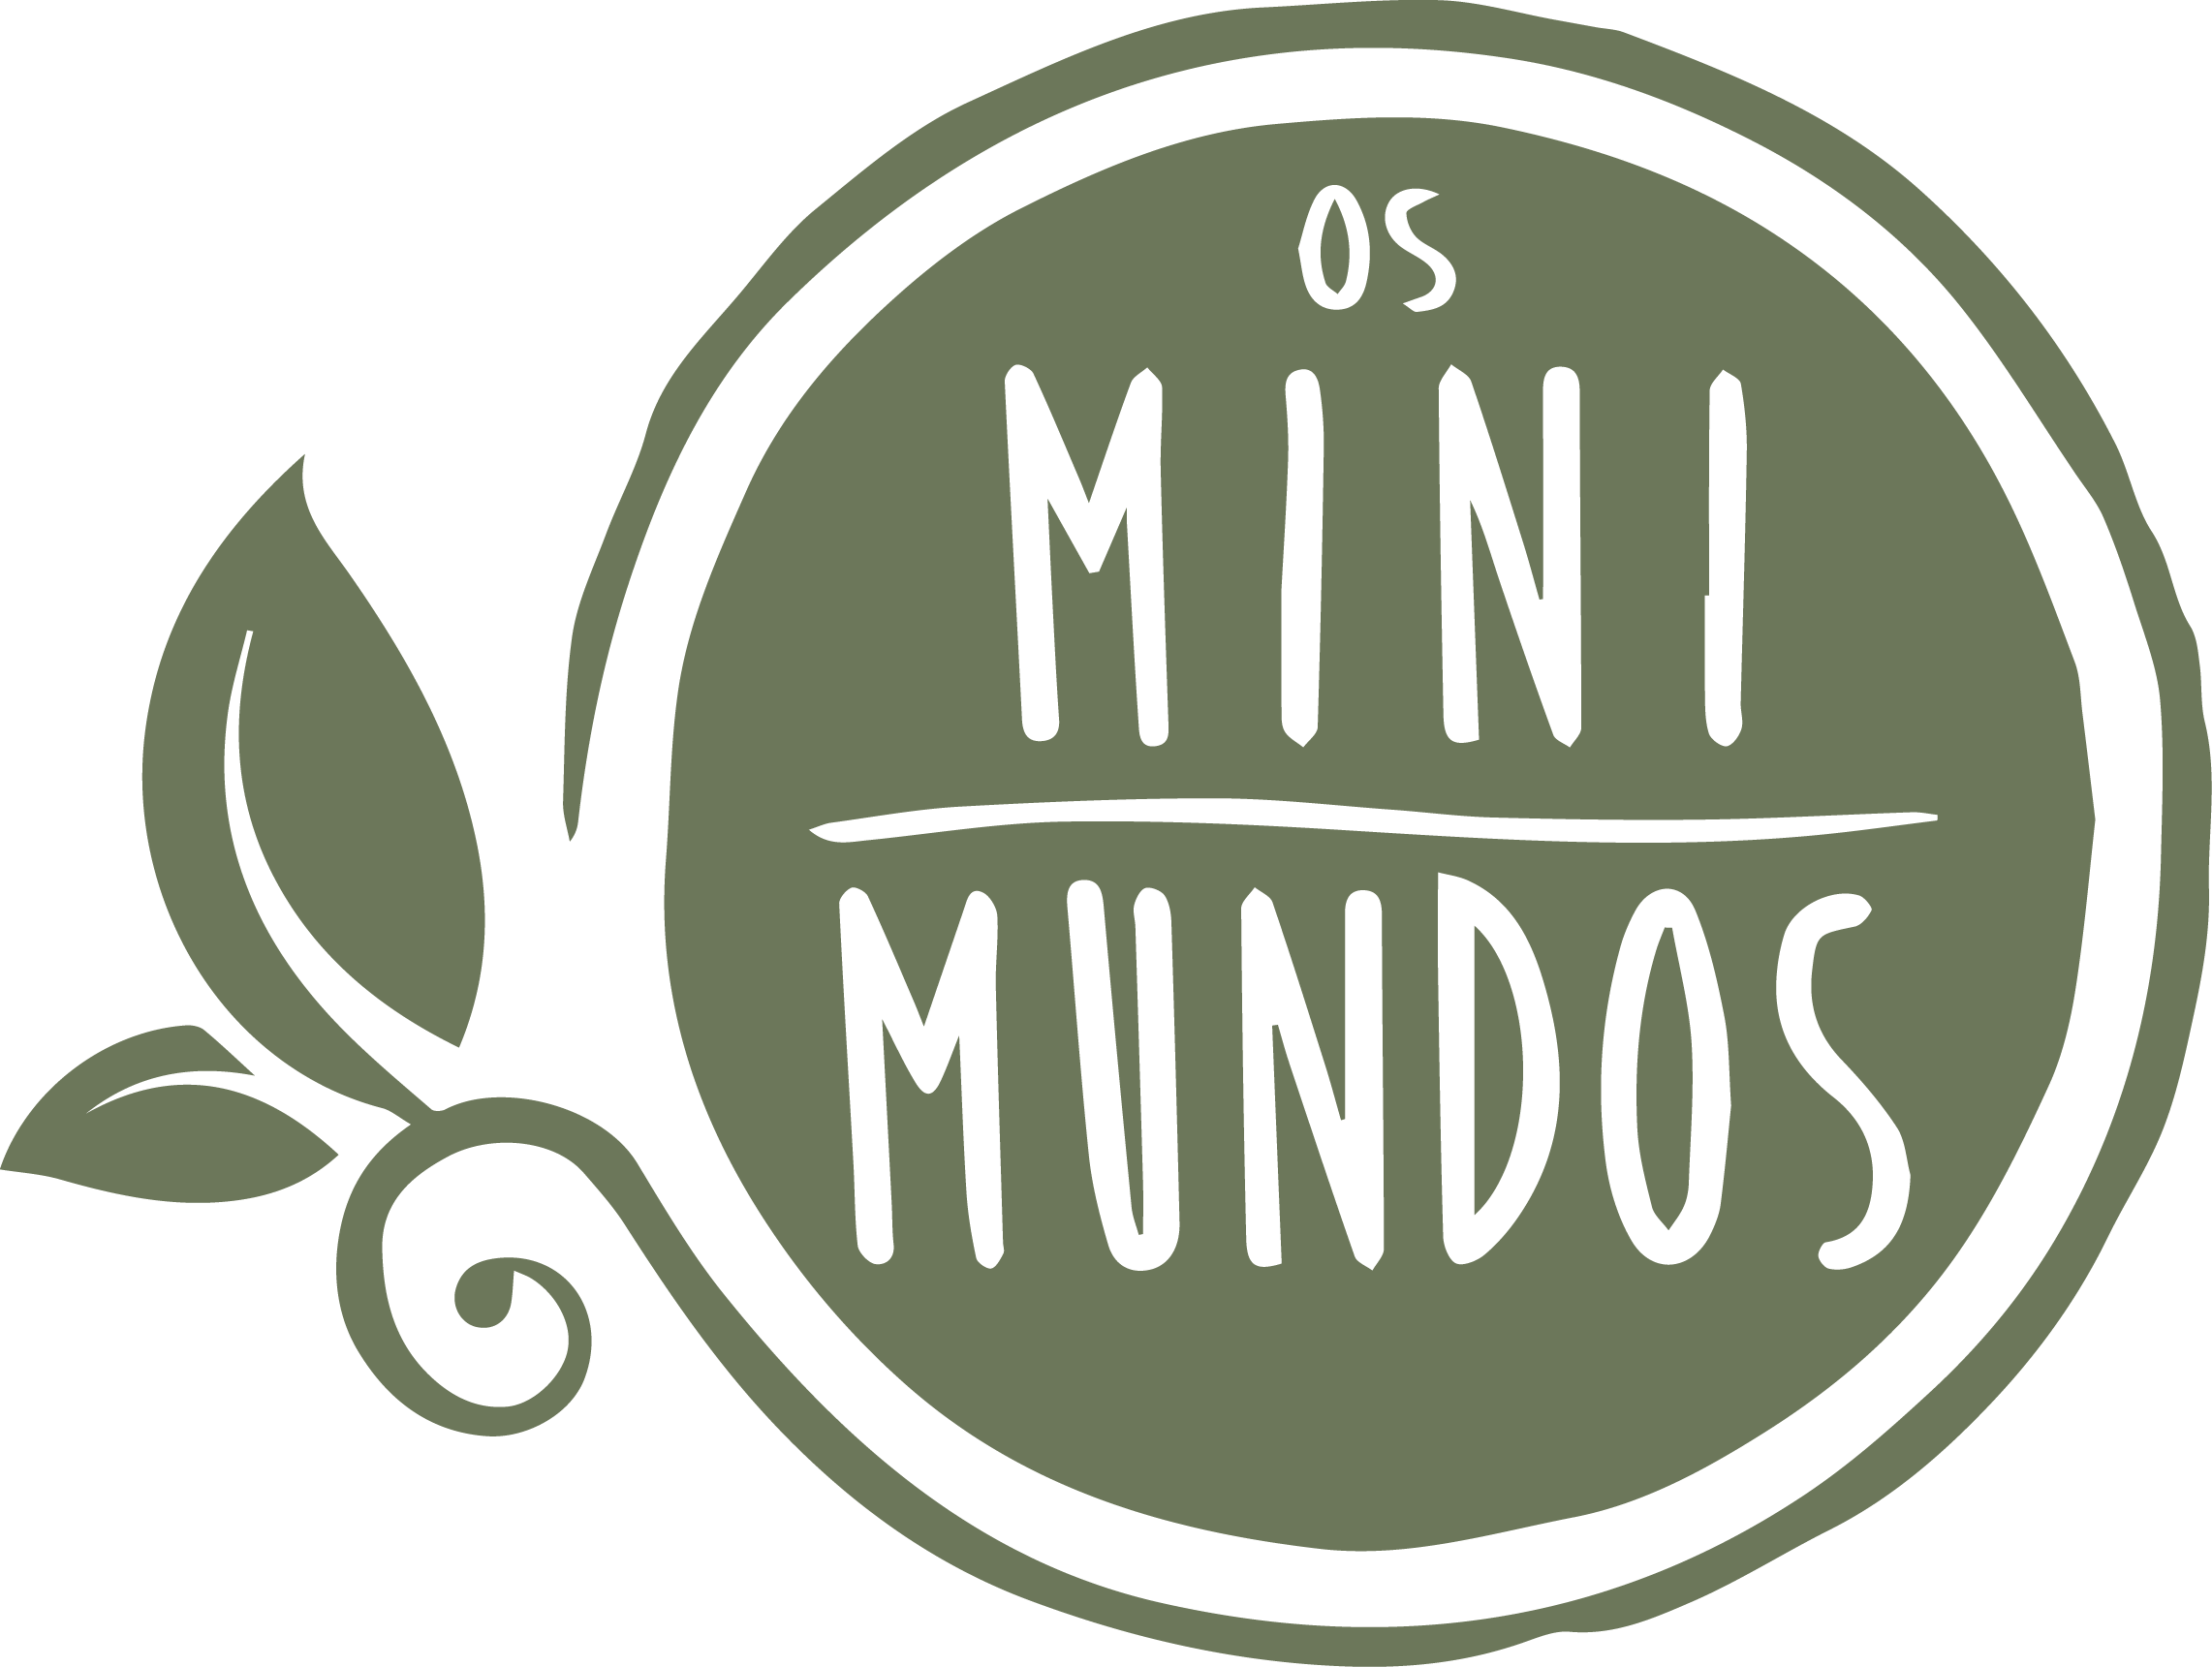 Minimudos Logo - Contato – os mini mundos